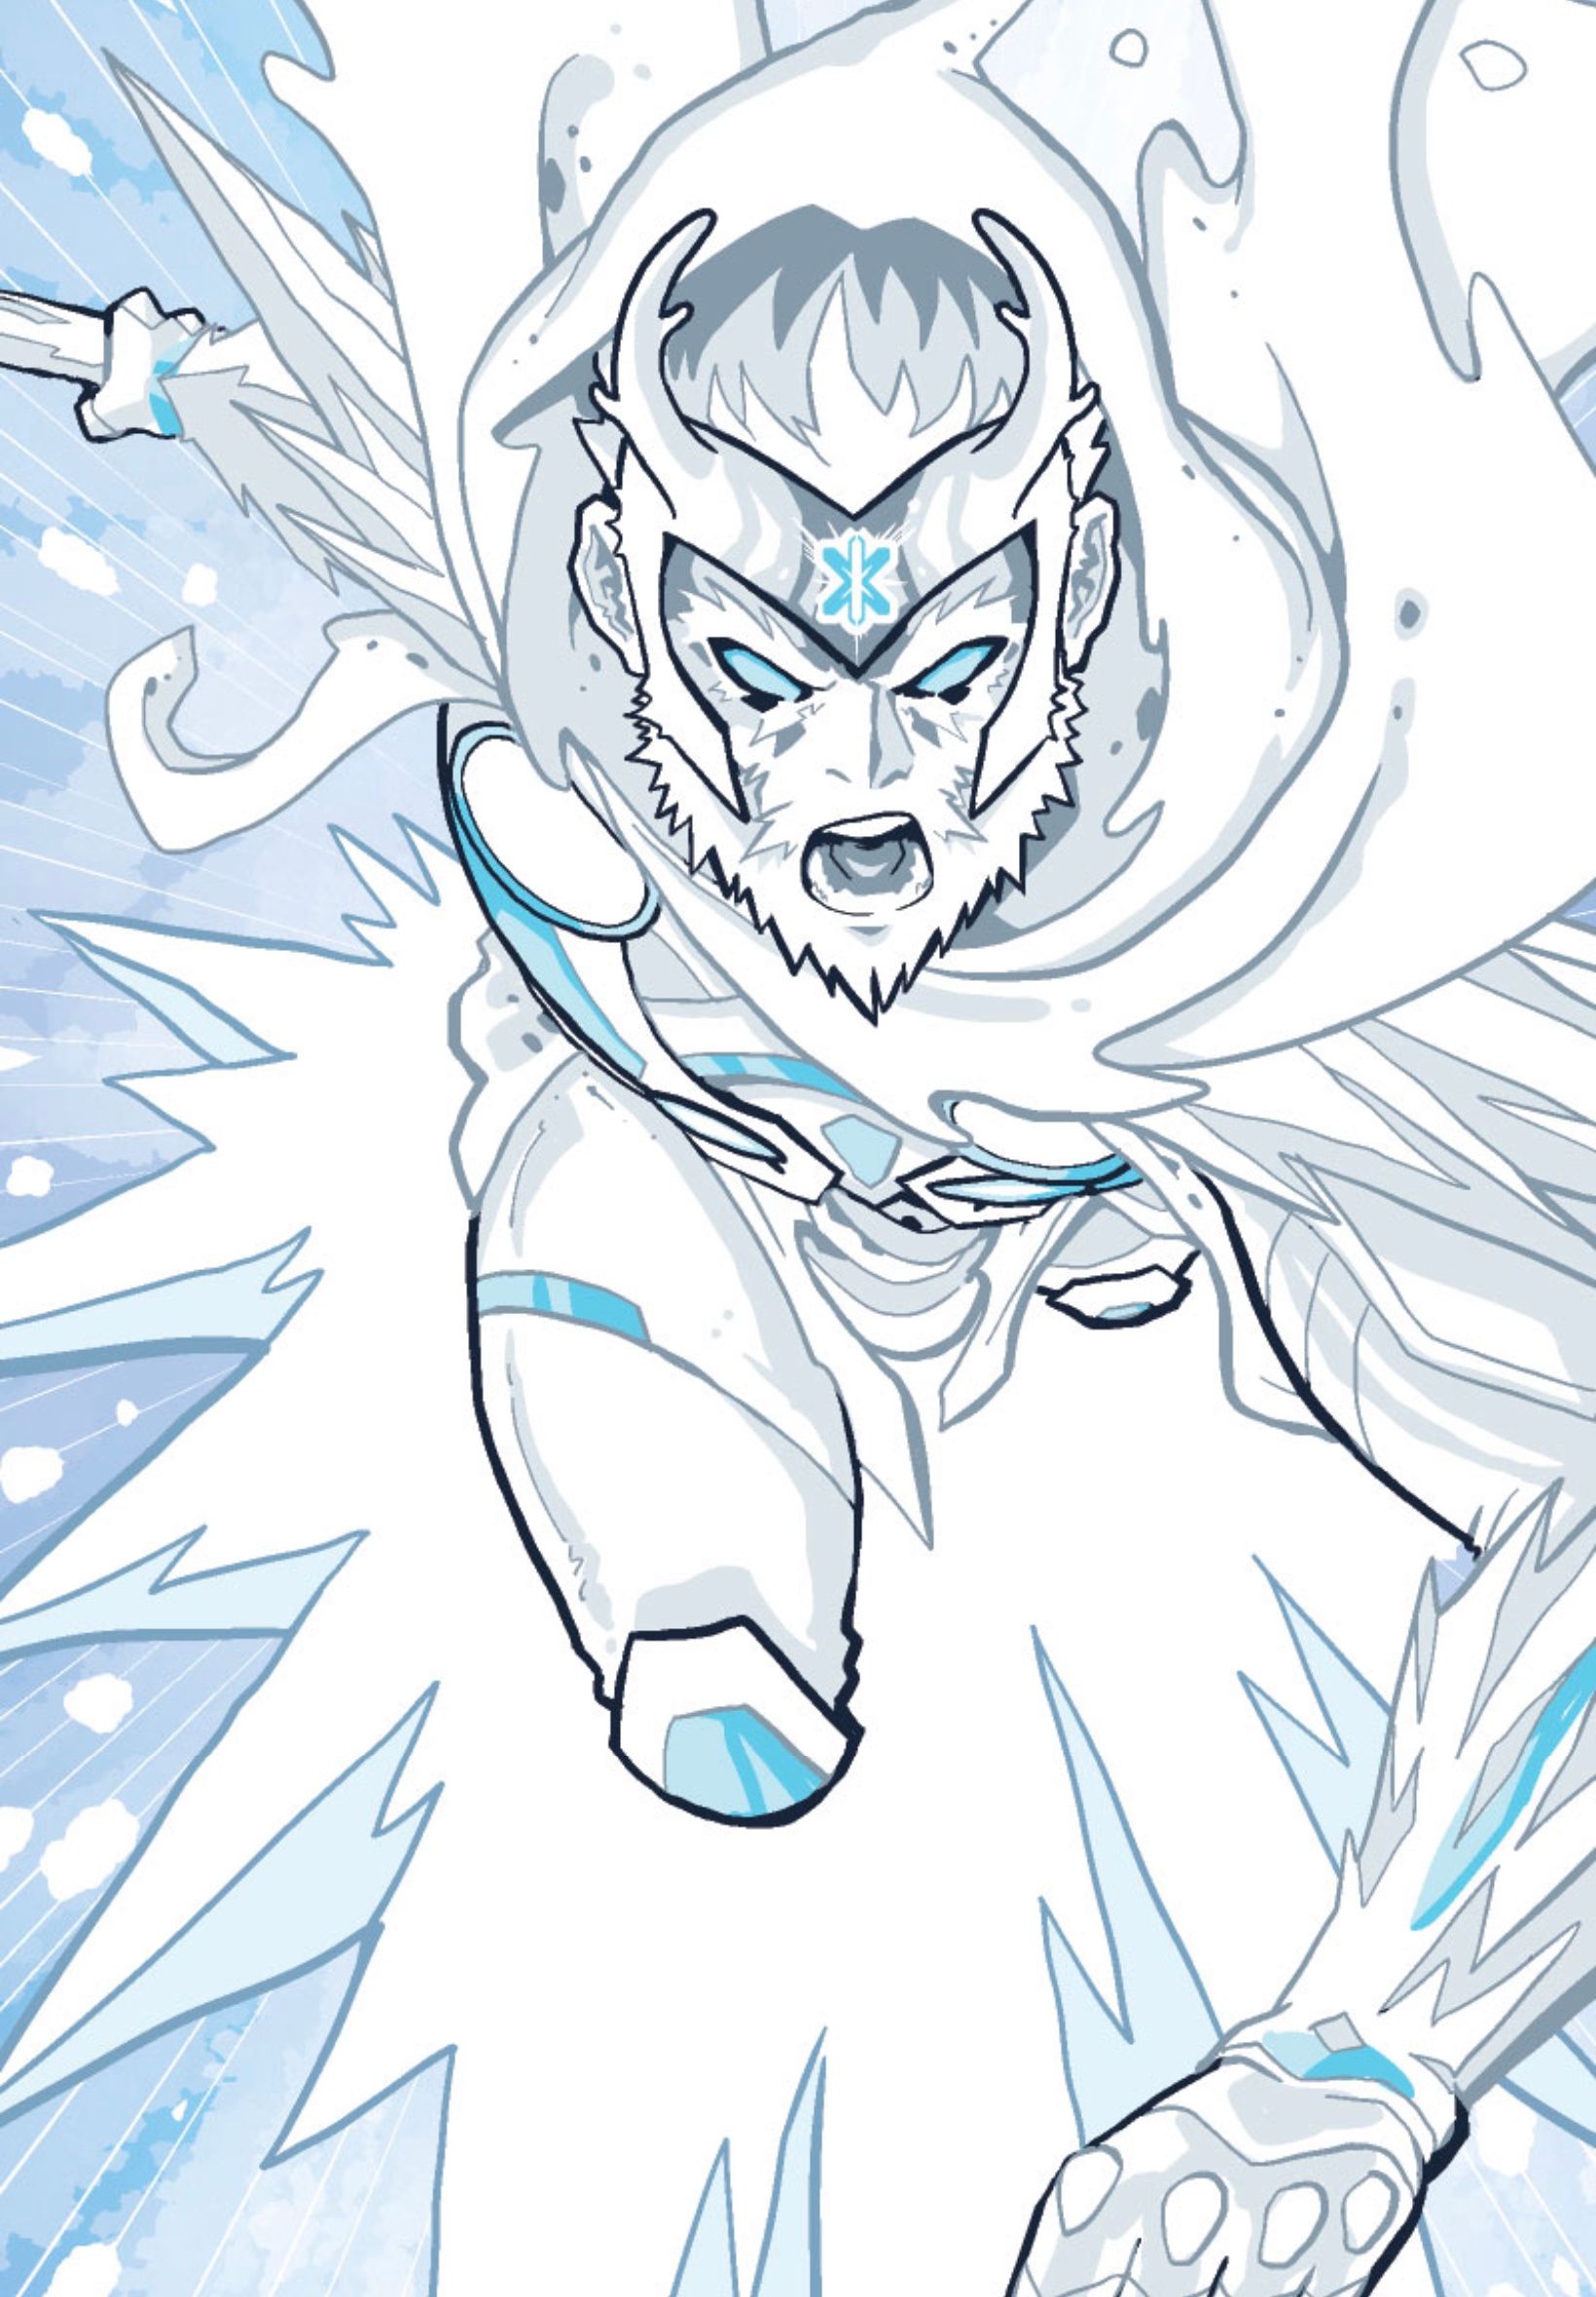 Iceman wears an Asgardian themed costume.